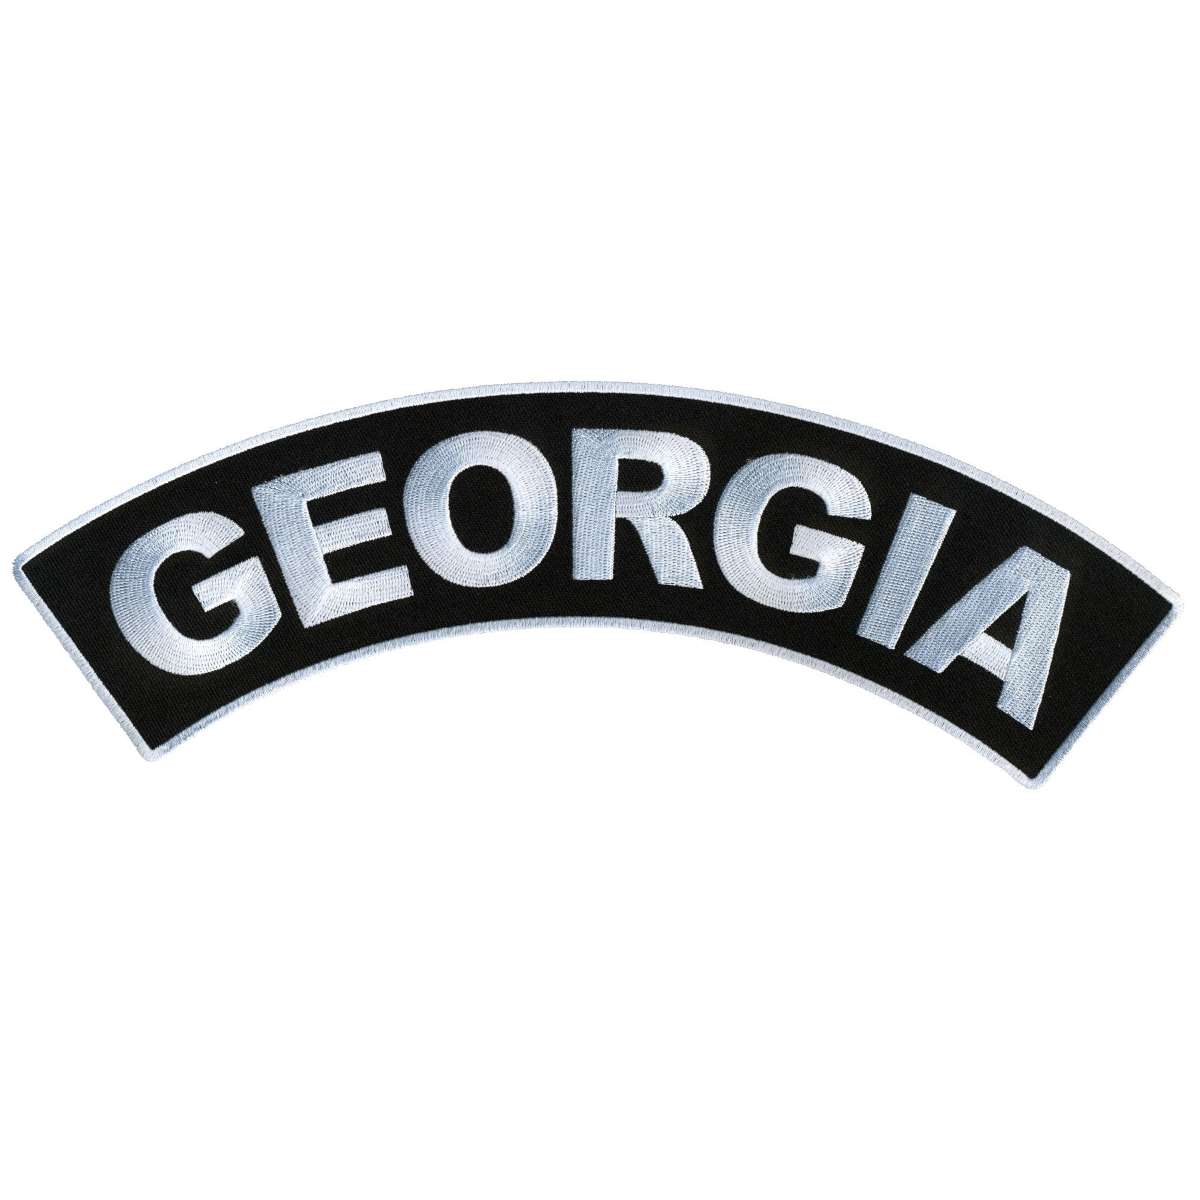 Hot Leathers Georgia 12” X 3” Top Rocker Patch PPM4019